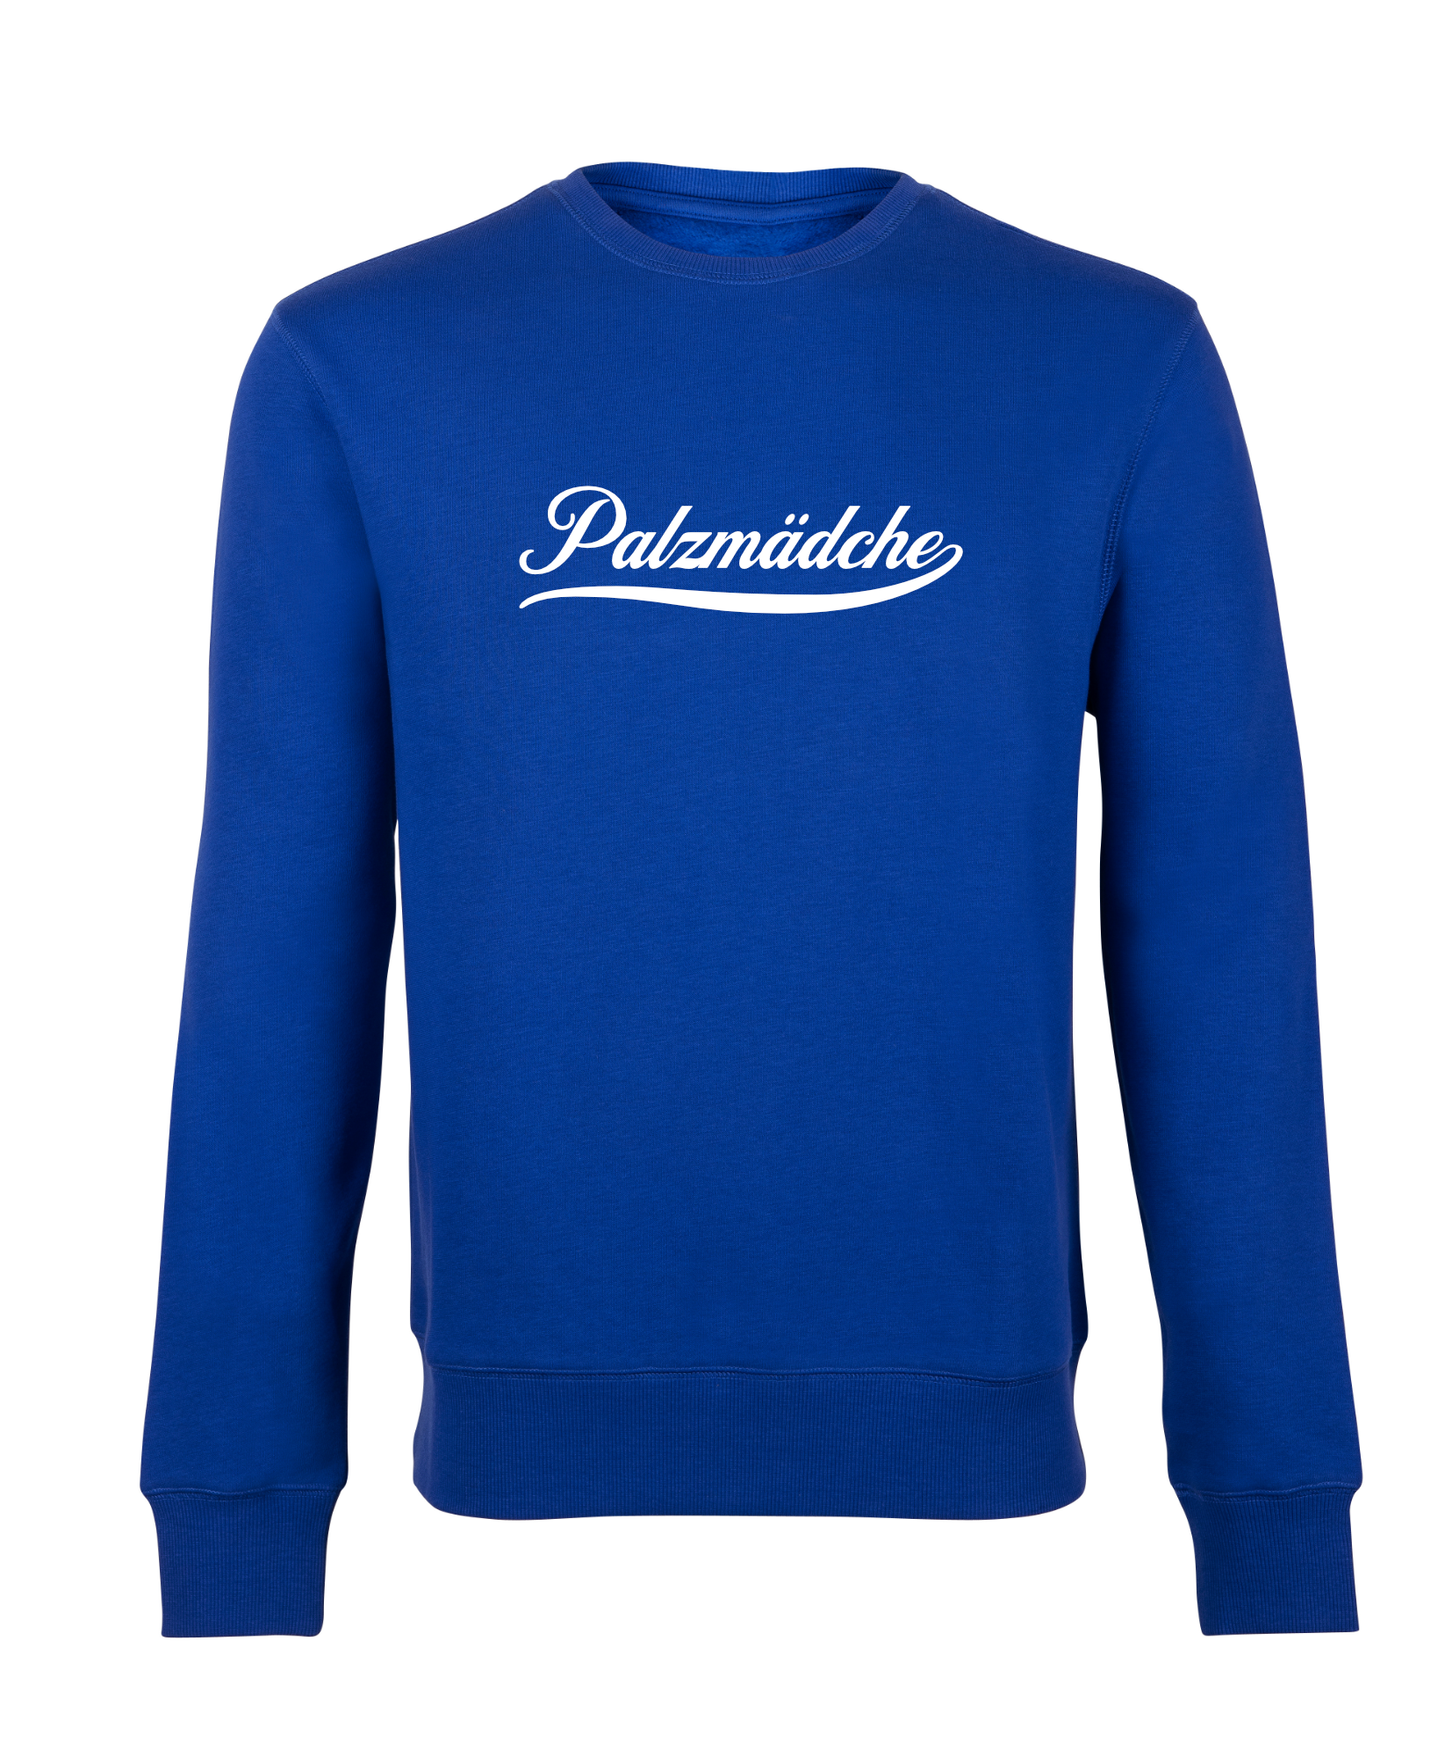 Palzmädche pREHmium - Sweatshirts